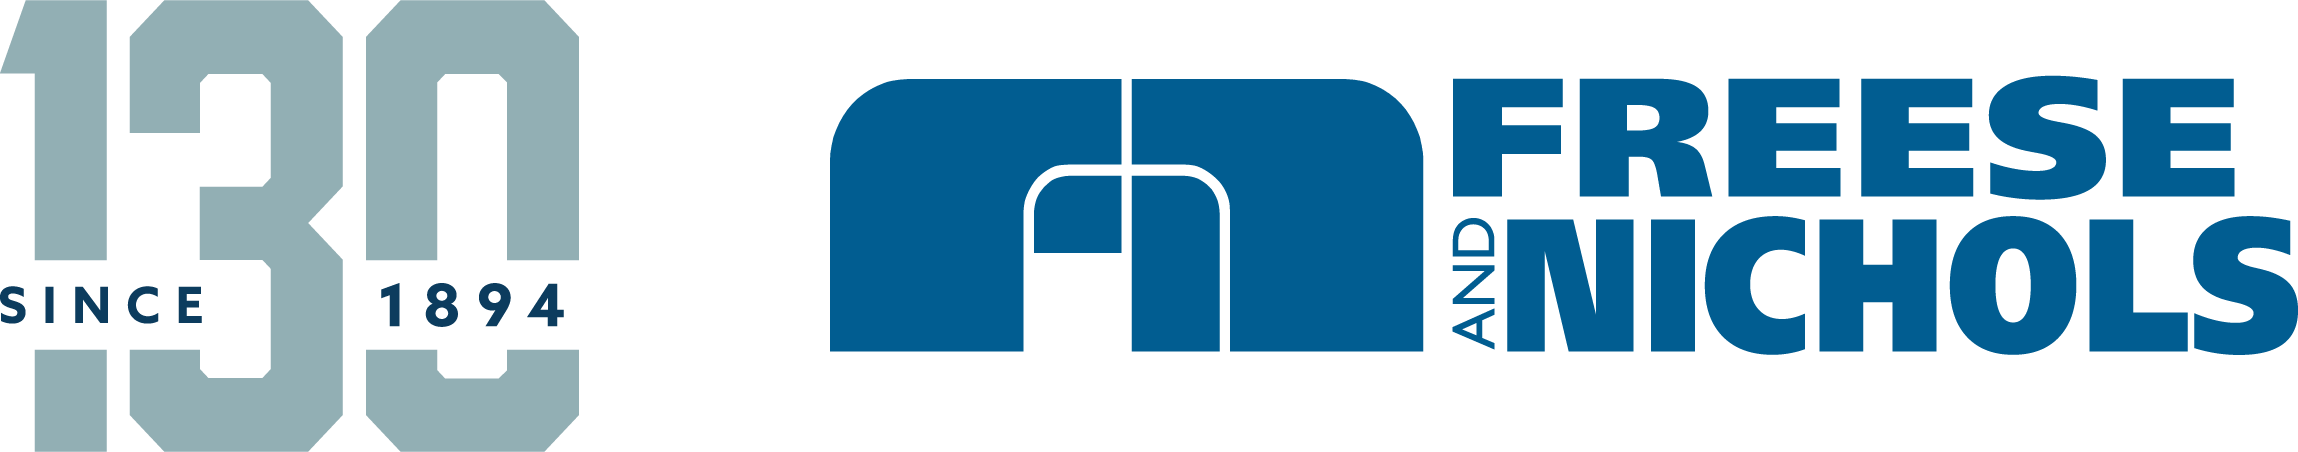 Freese and Nichols Logo